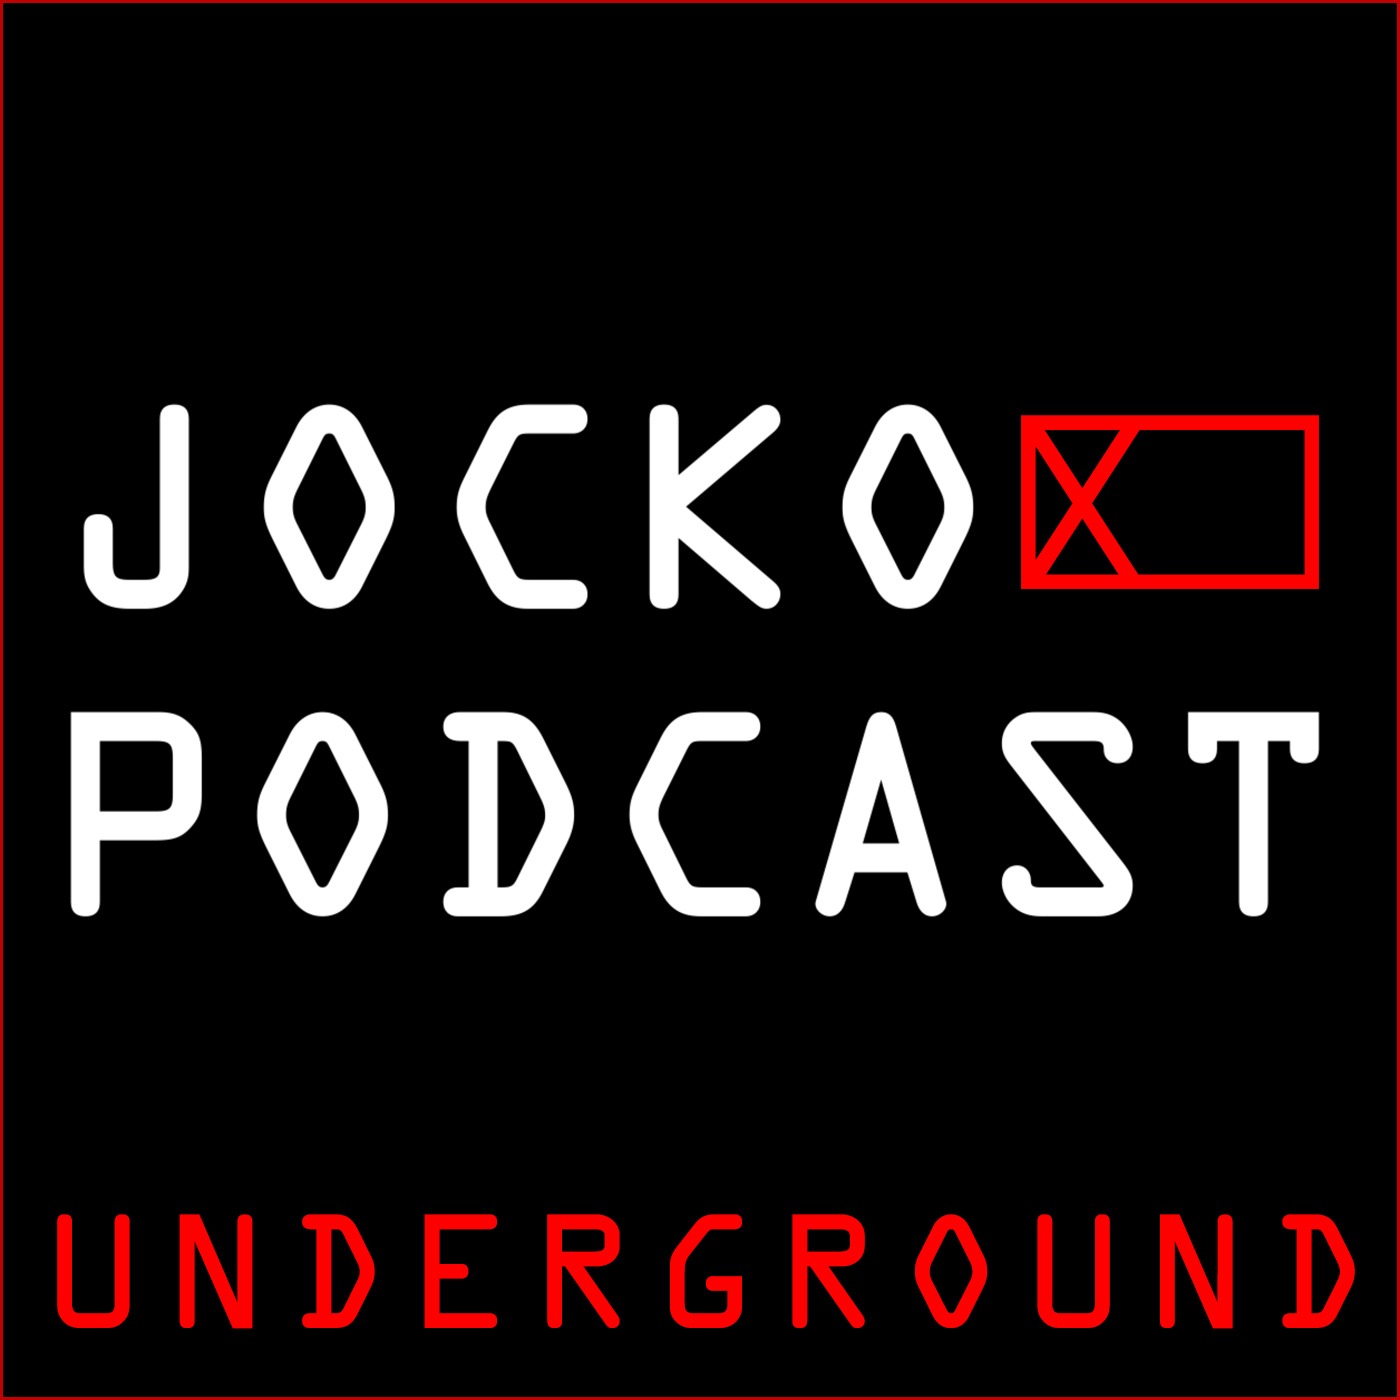 Jocko Underground: Jocko Got Shadow-Banned. But Why, Exactly?